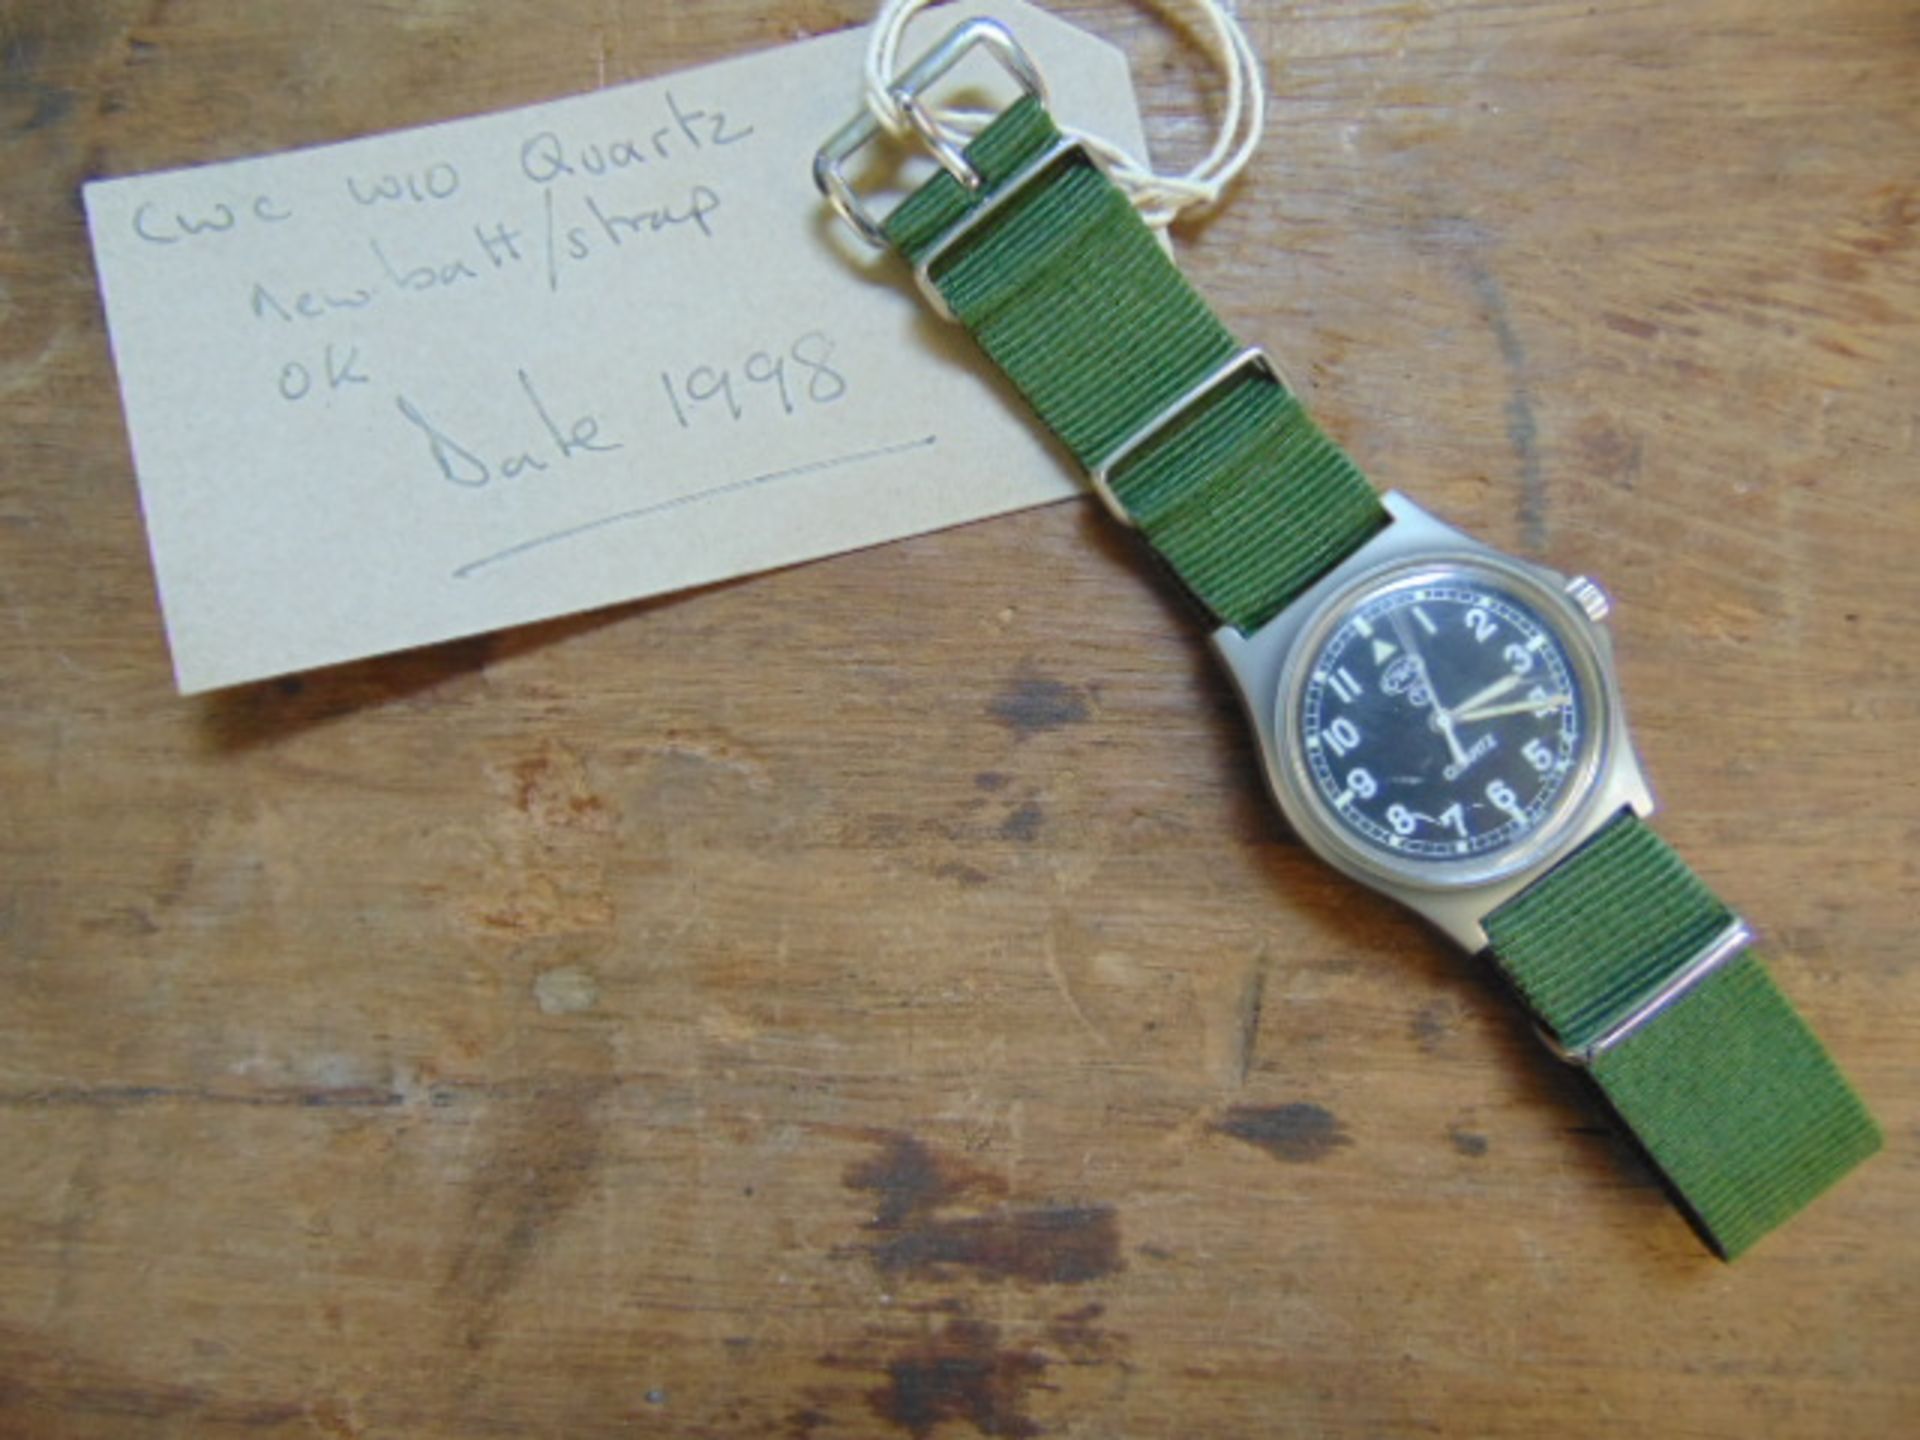 Genuine British Army, CWC Quartz Wrist Watch - Image 2 of 6